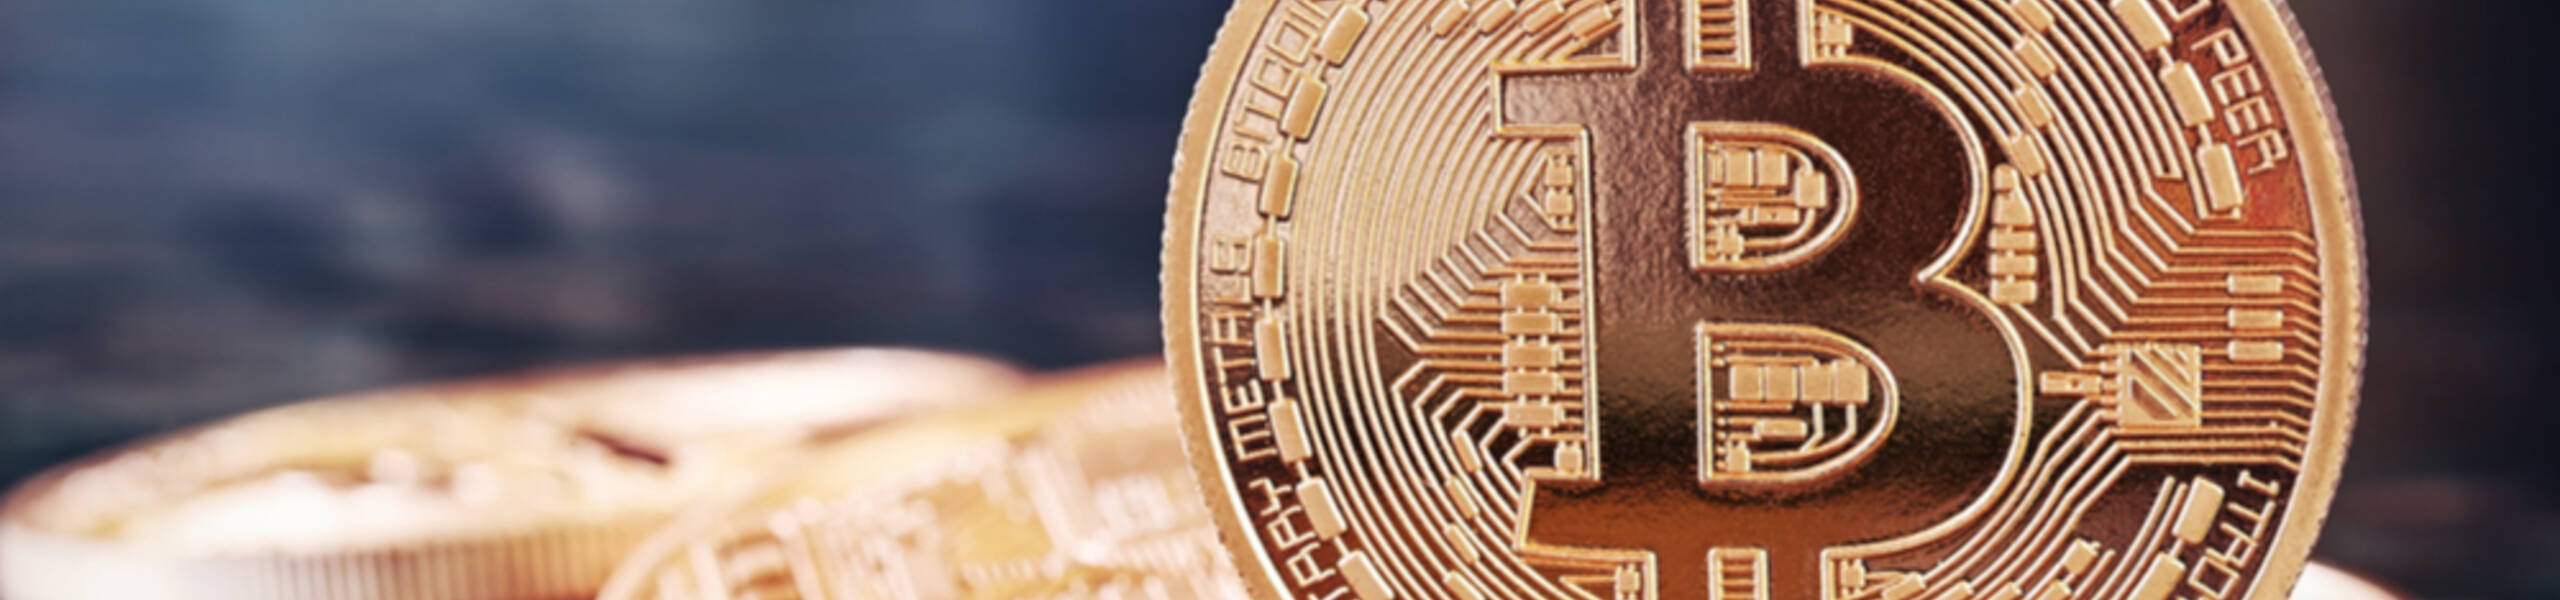 Bitcoin คือประเภทสินทรัพย์ใหม่ที่ลงทุนได้